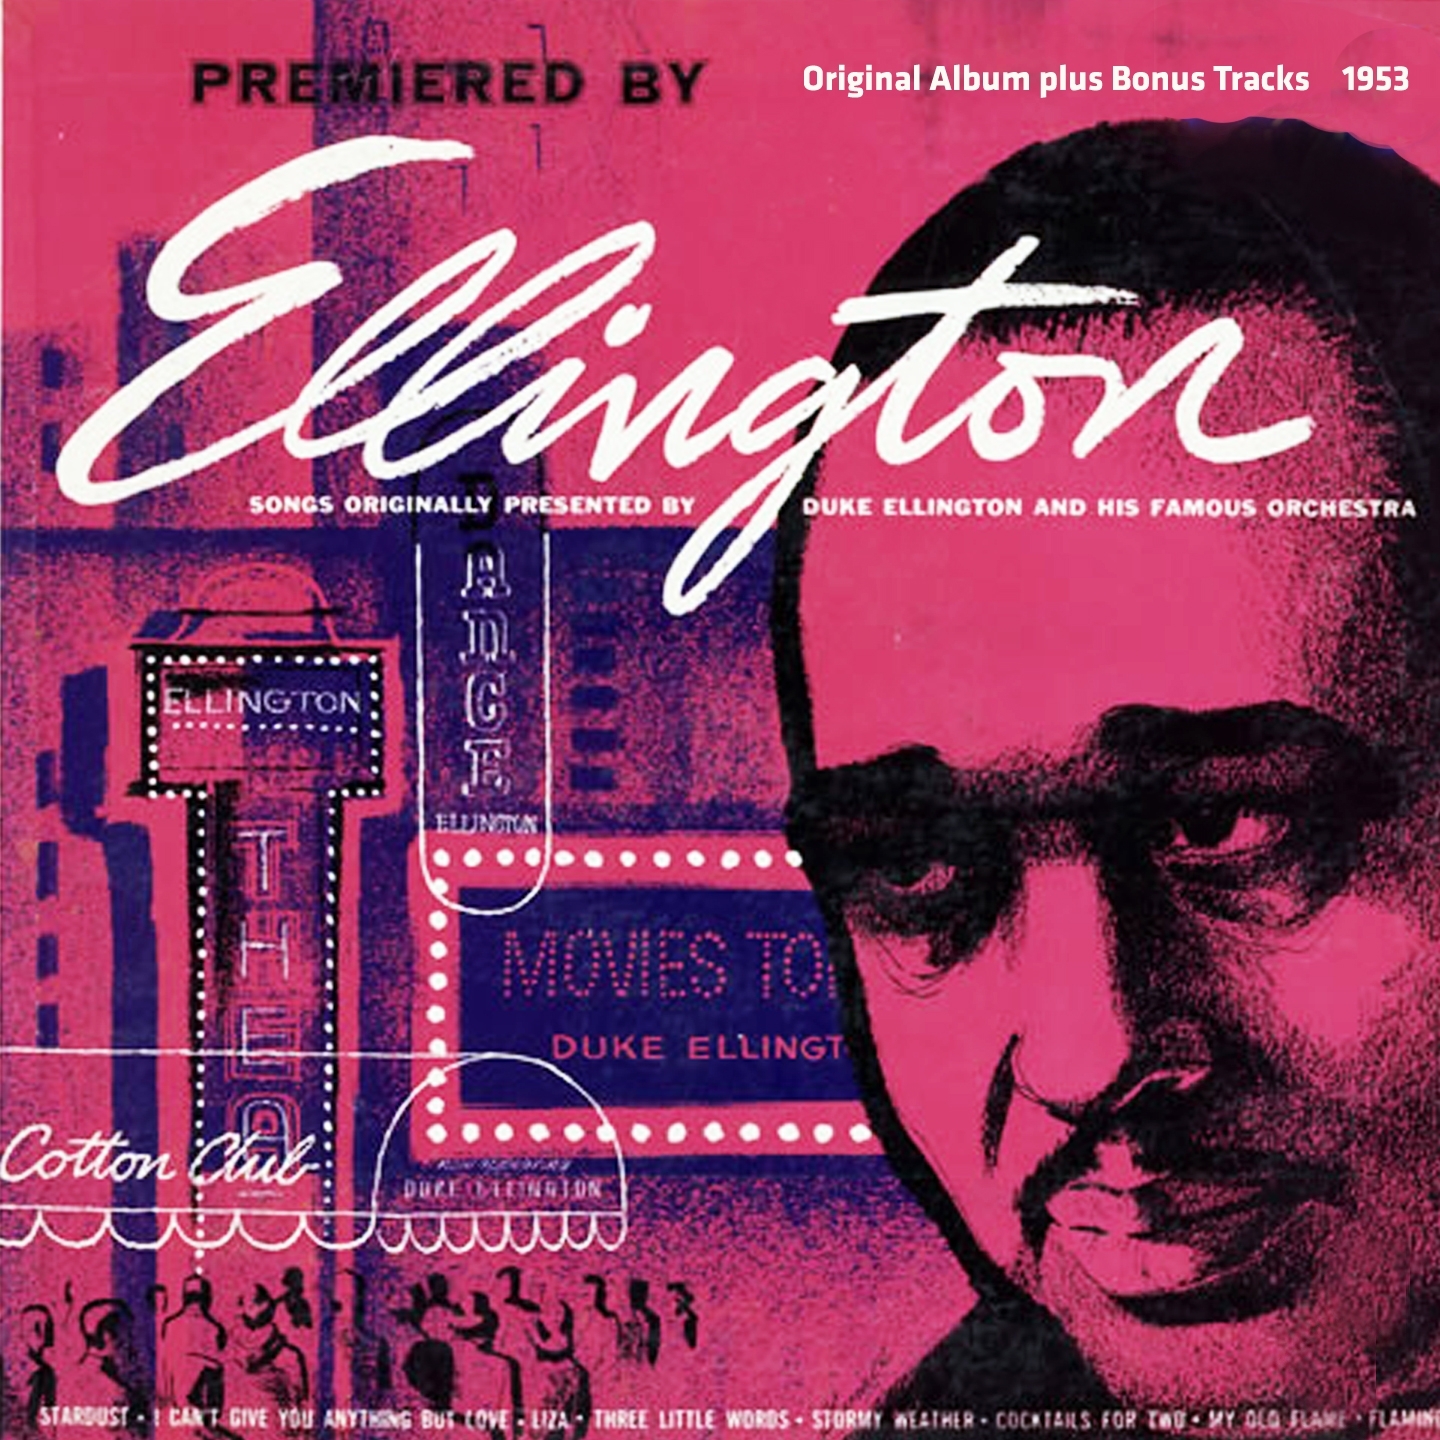 Premiered By Ellington